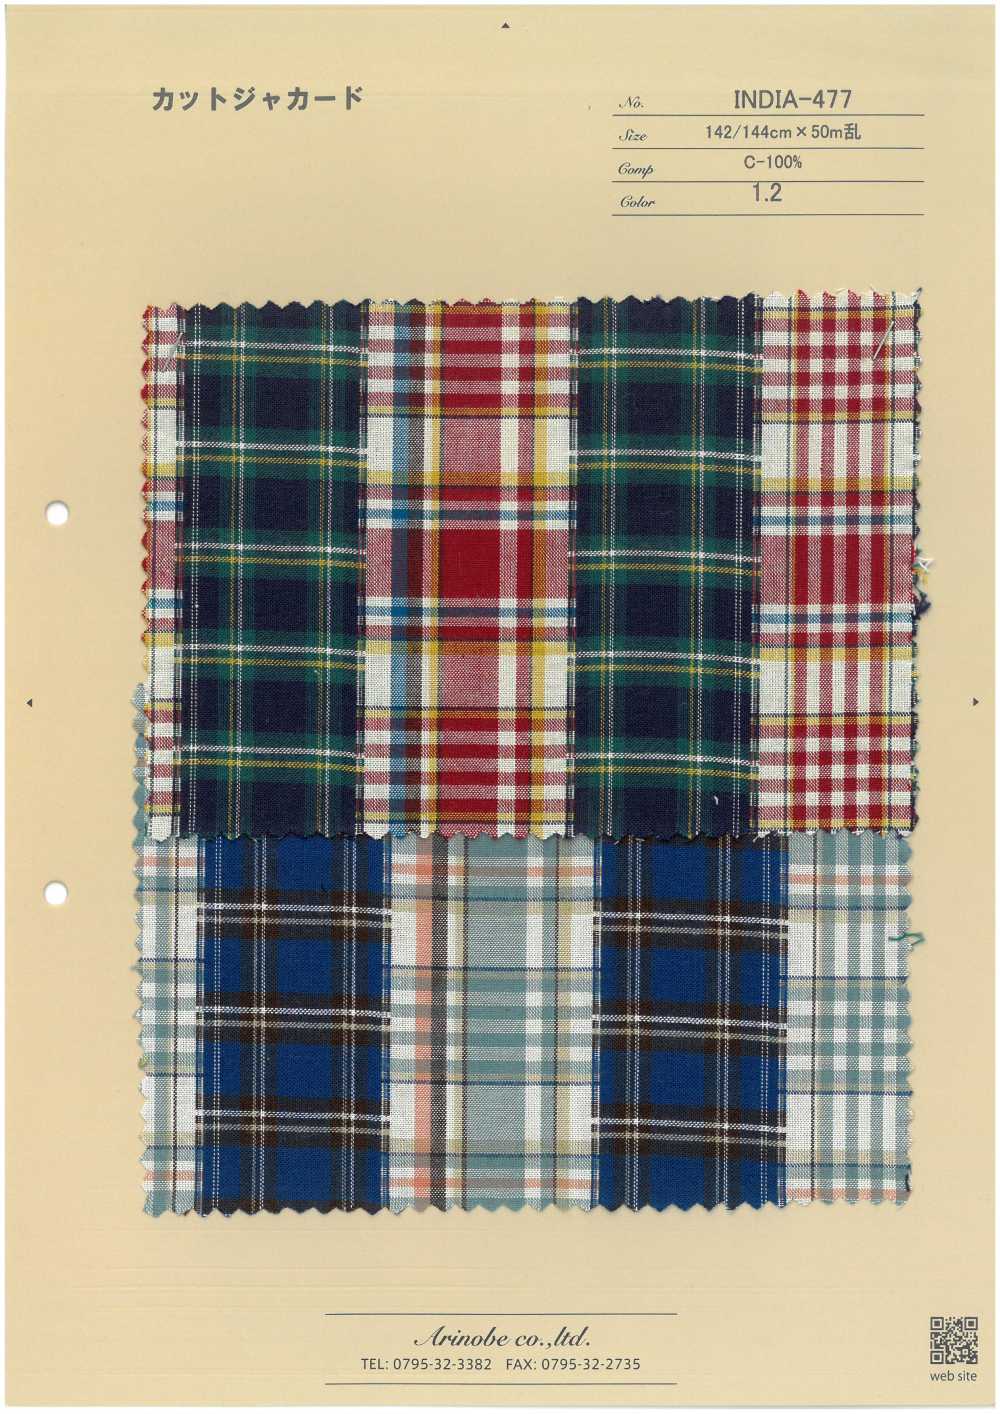 INDIA-477 Cut Jacquard[Textile / Fabric] ARINOBE CO., LTD.